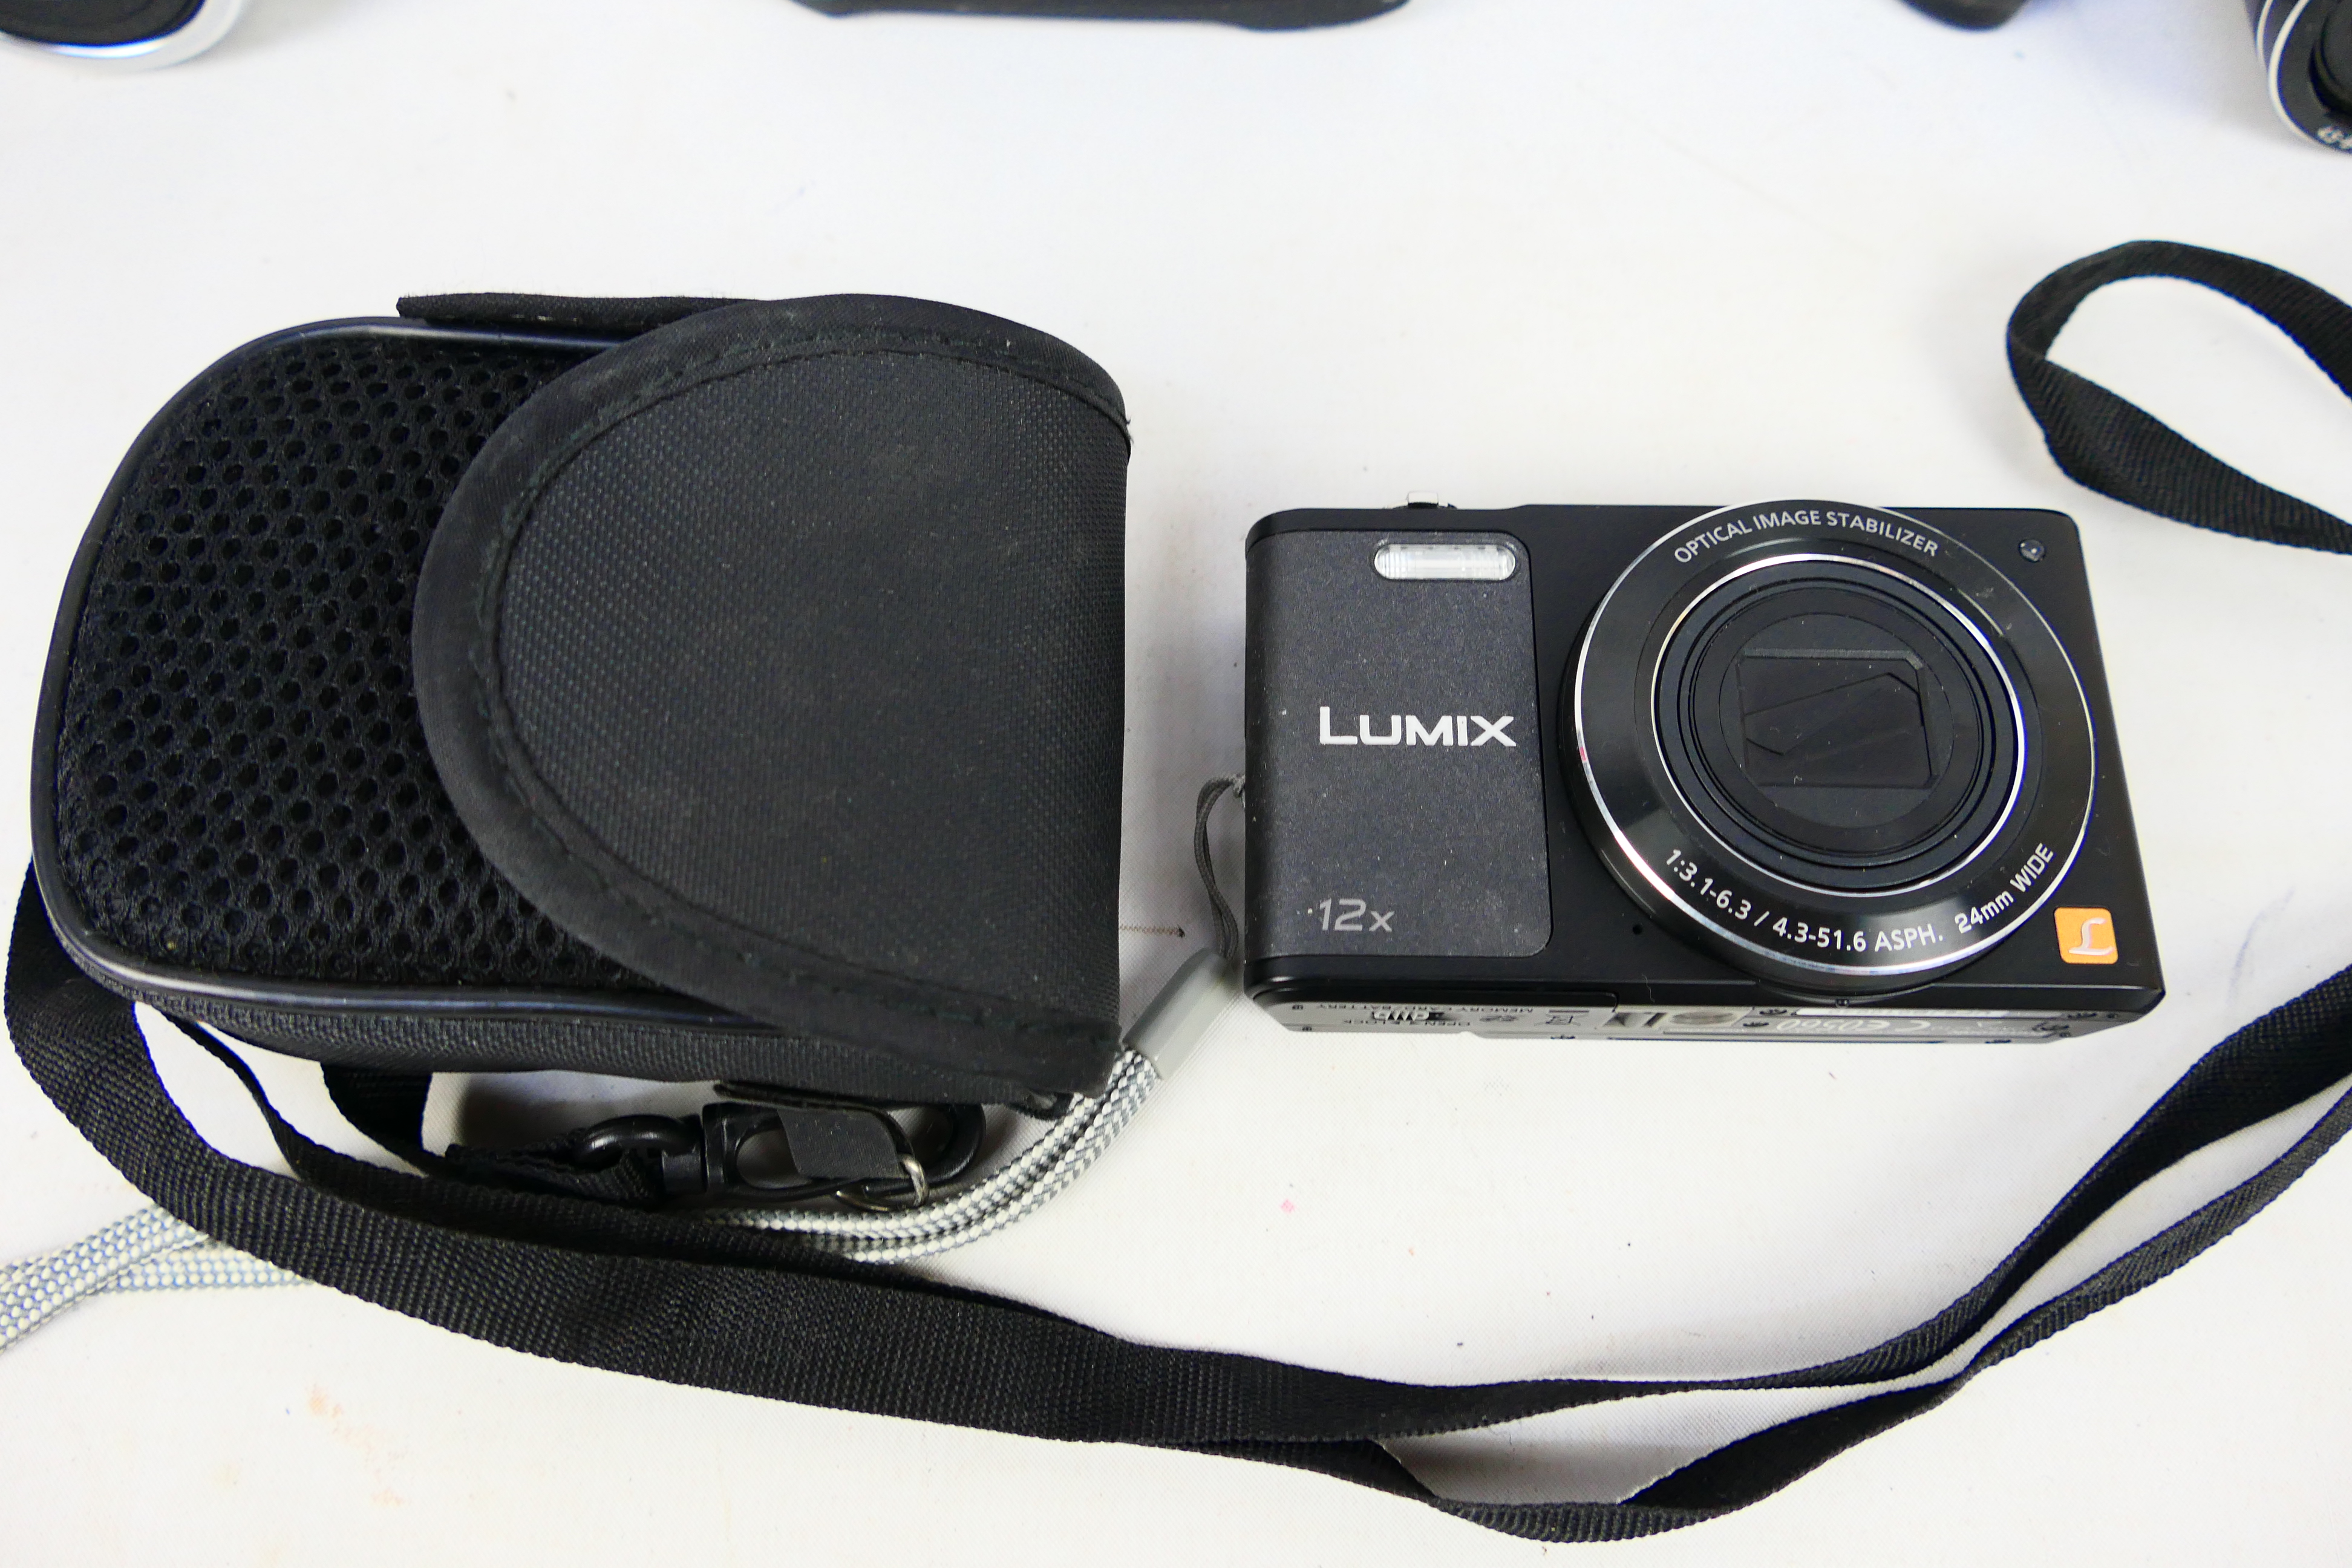 Canon, Nikon, Panasonic, Lumix, Vivitar, Fujifilm - 6 x cameras - Lot includes a Nikon Coolpix L120. - Image 2 of 6